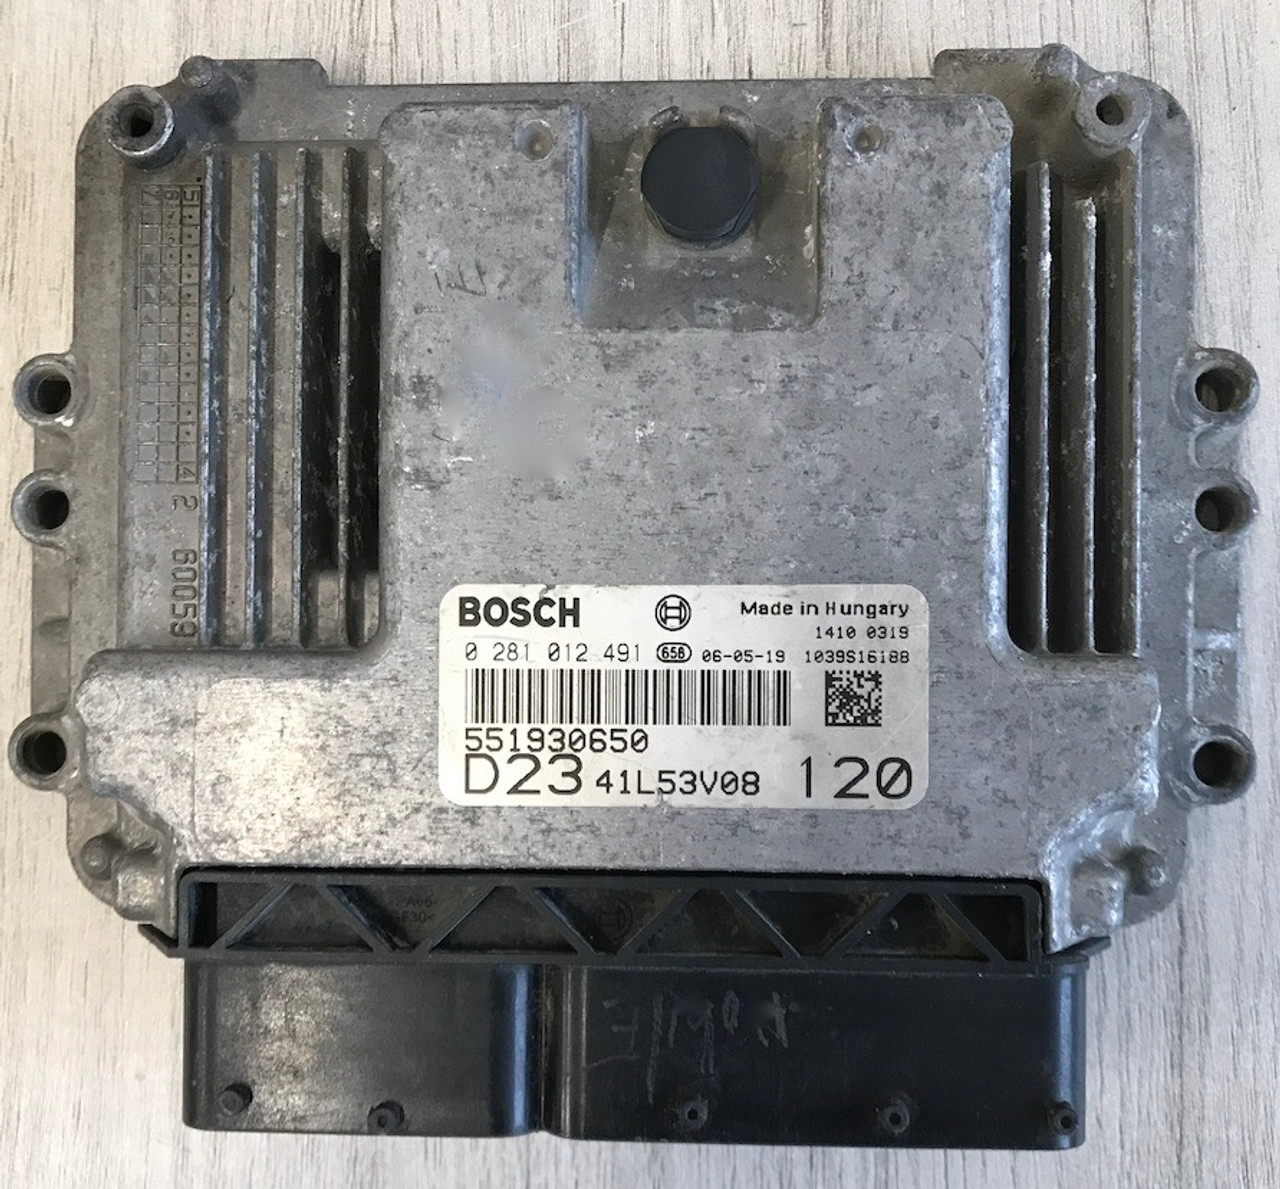 Bosch Engine ECU, Fiat, 0281012491, 0 281 012 491, 551930650, 1039S16188, D23